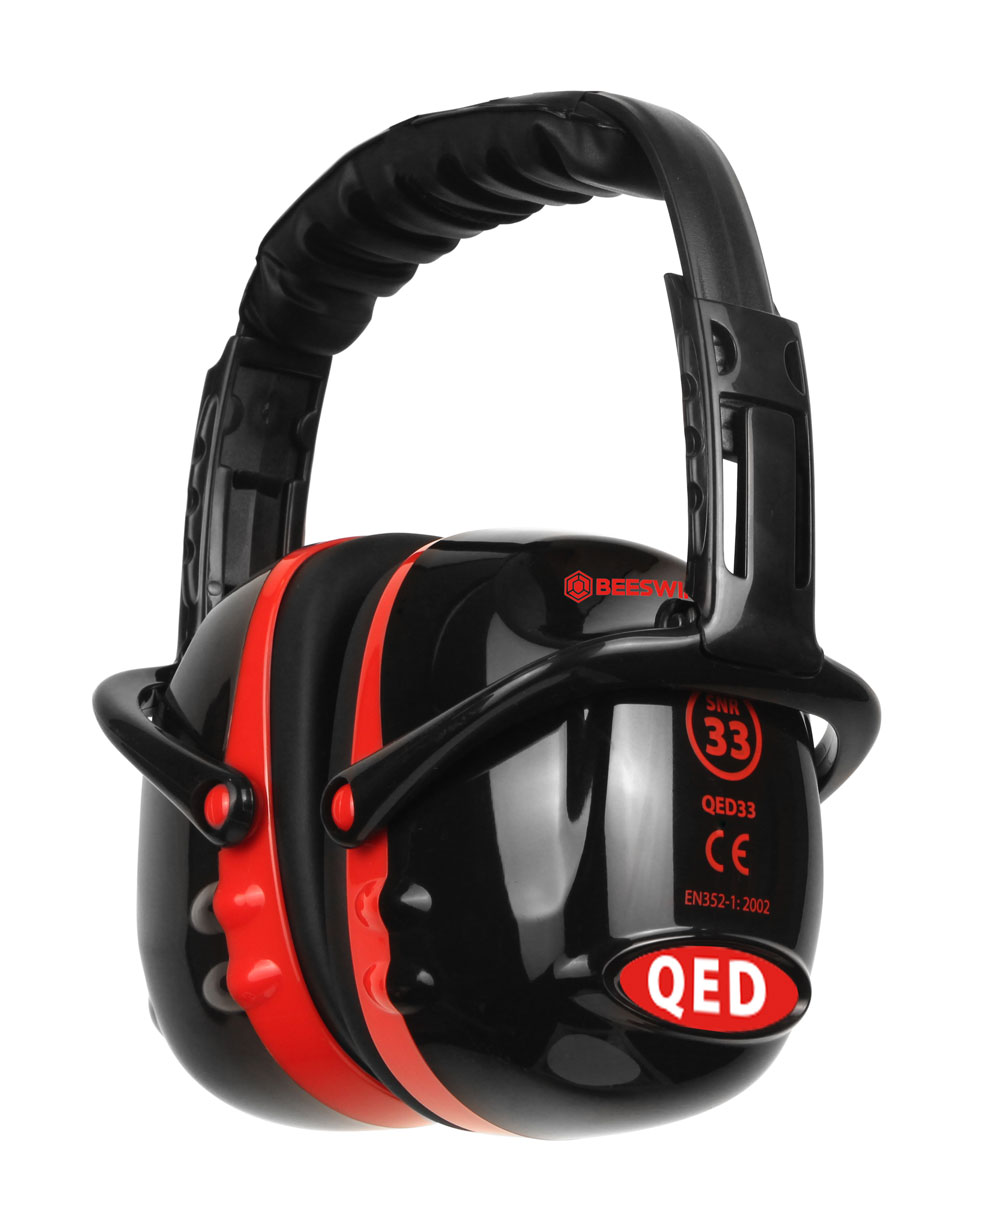 QED33 EAR DEFENDER 